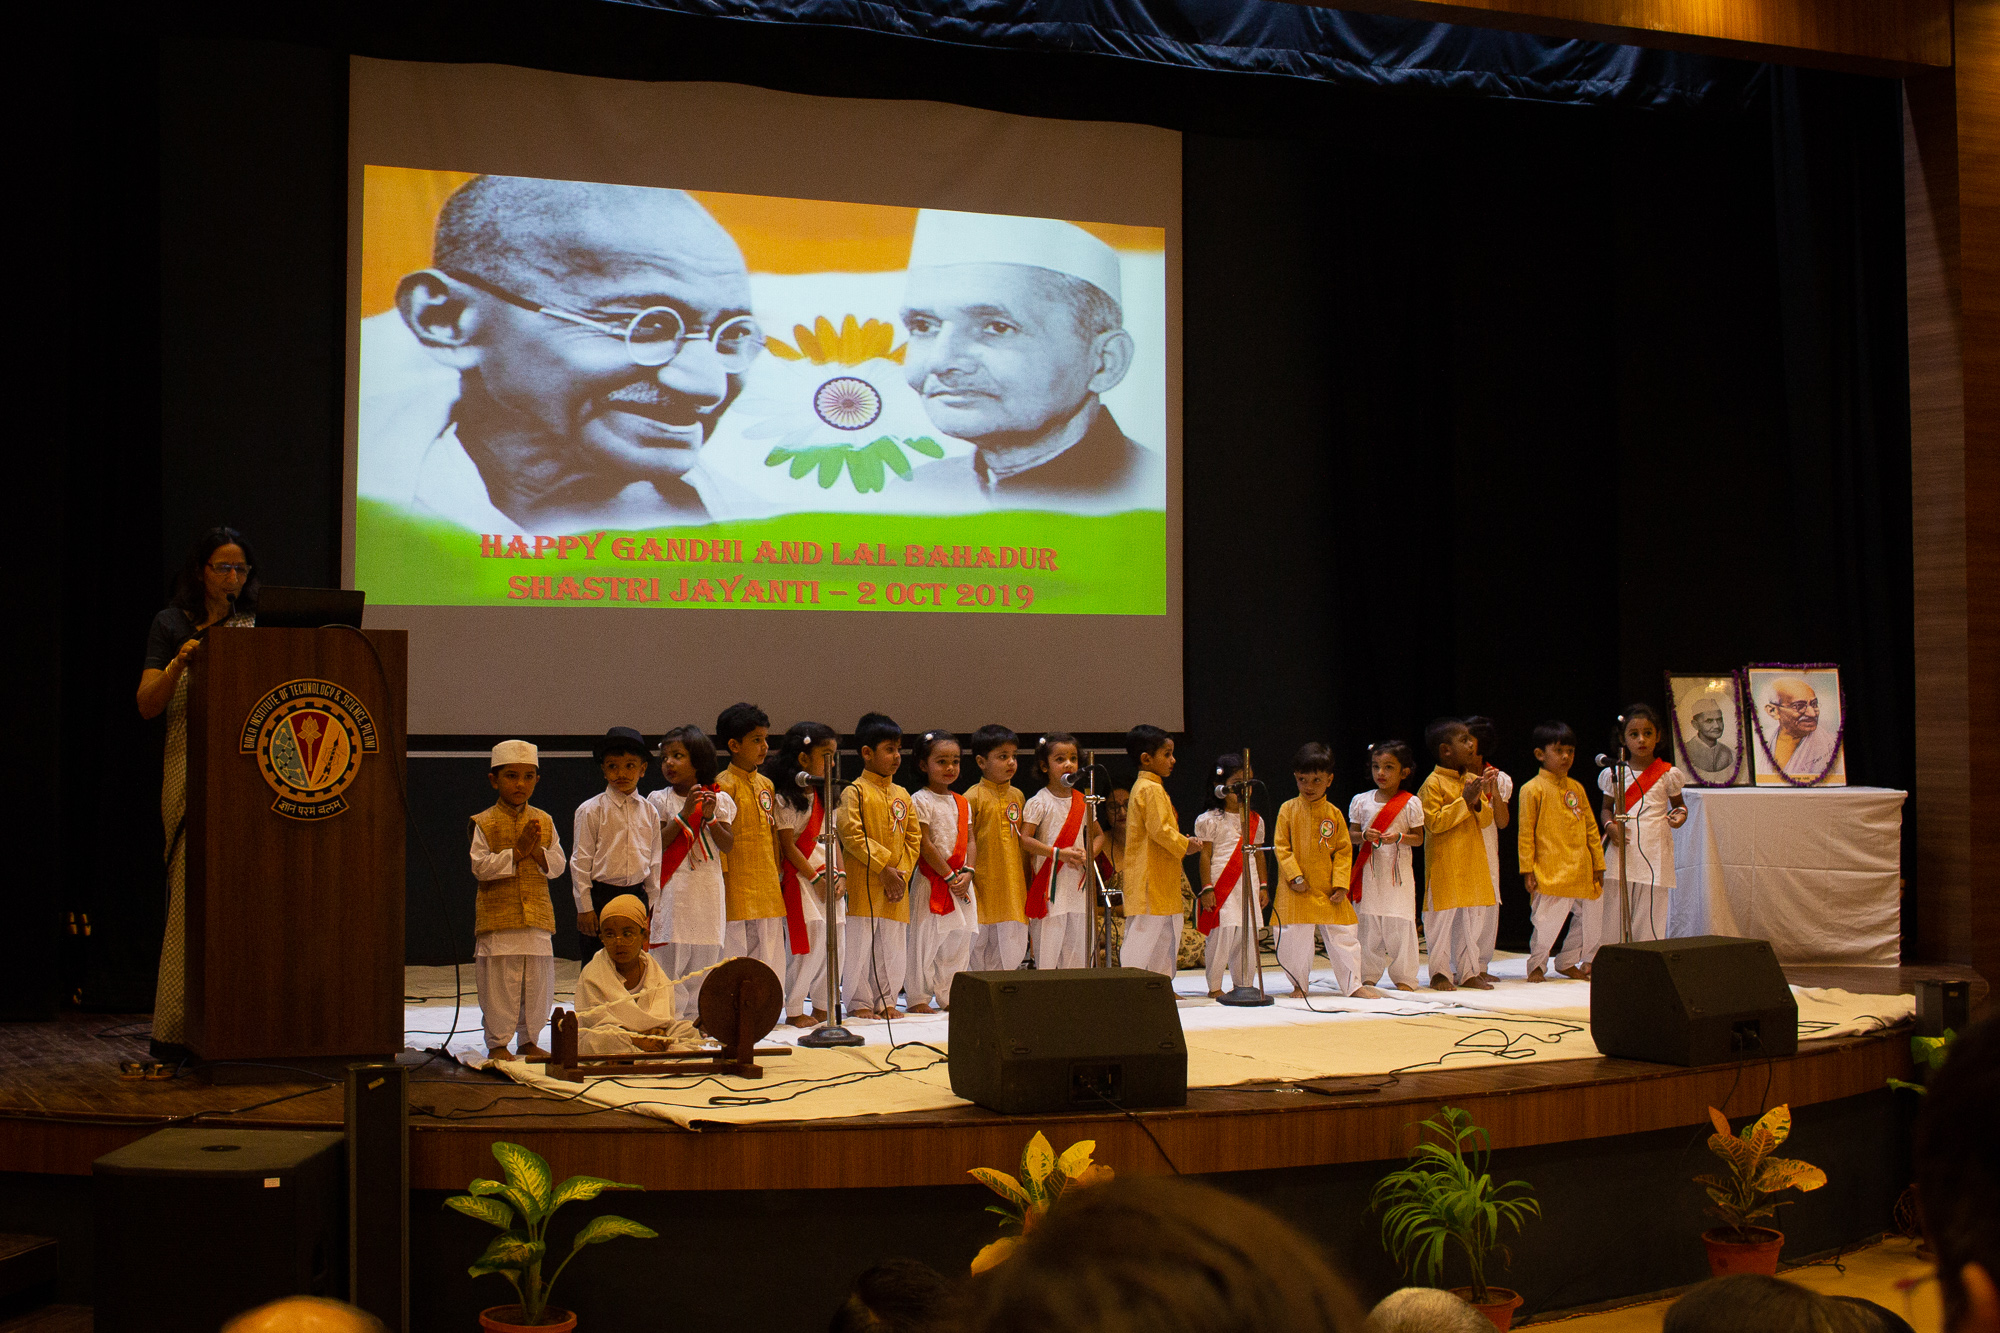 Children\\'s choir singing at Ghandi\\'s birthday celebration at BITS Pilani